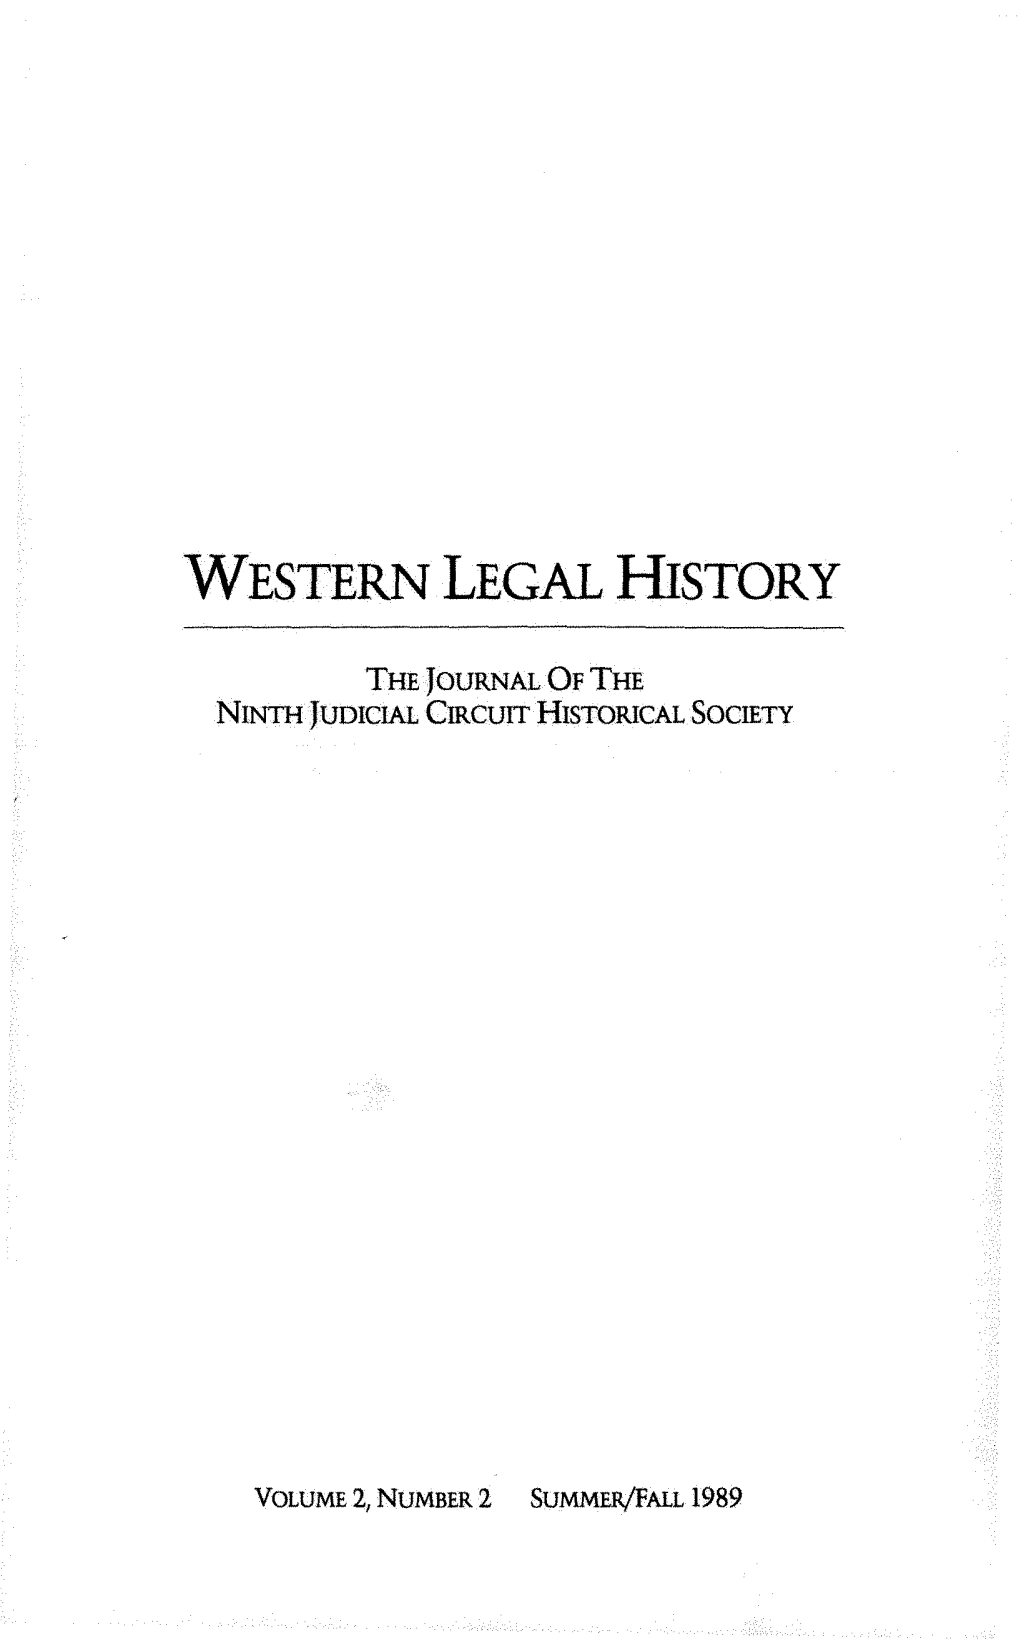 Western Legal History